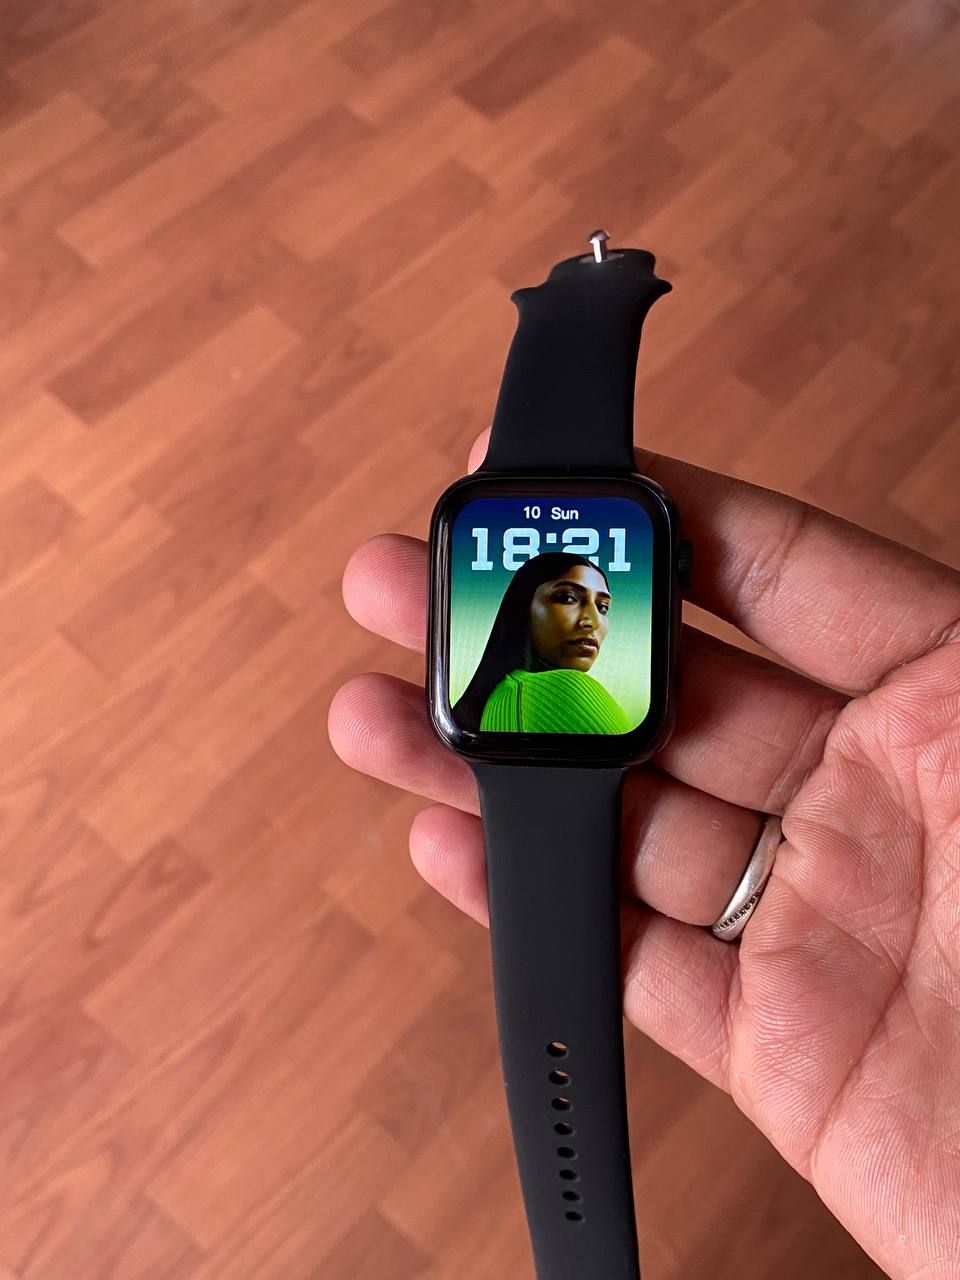 Stuck on apple logo - Apple Watch SE - iFixit